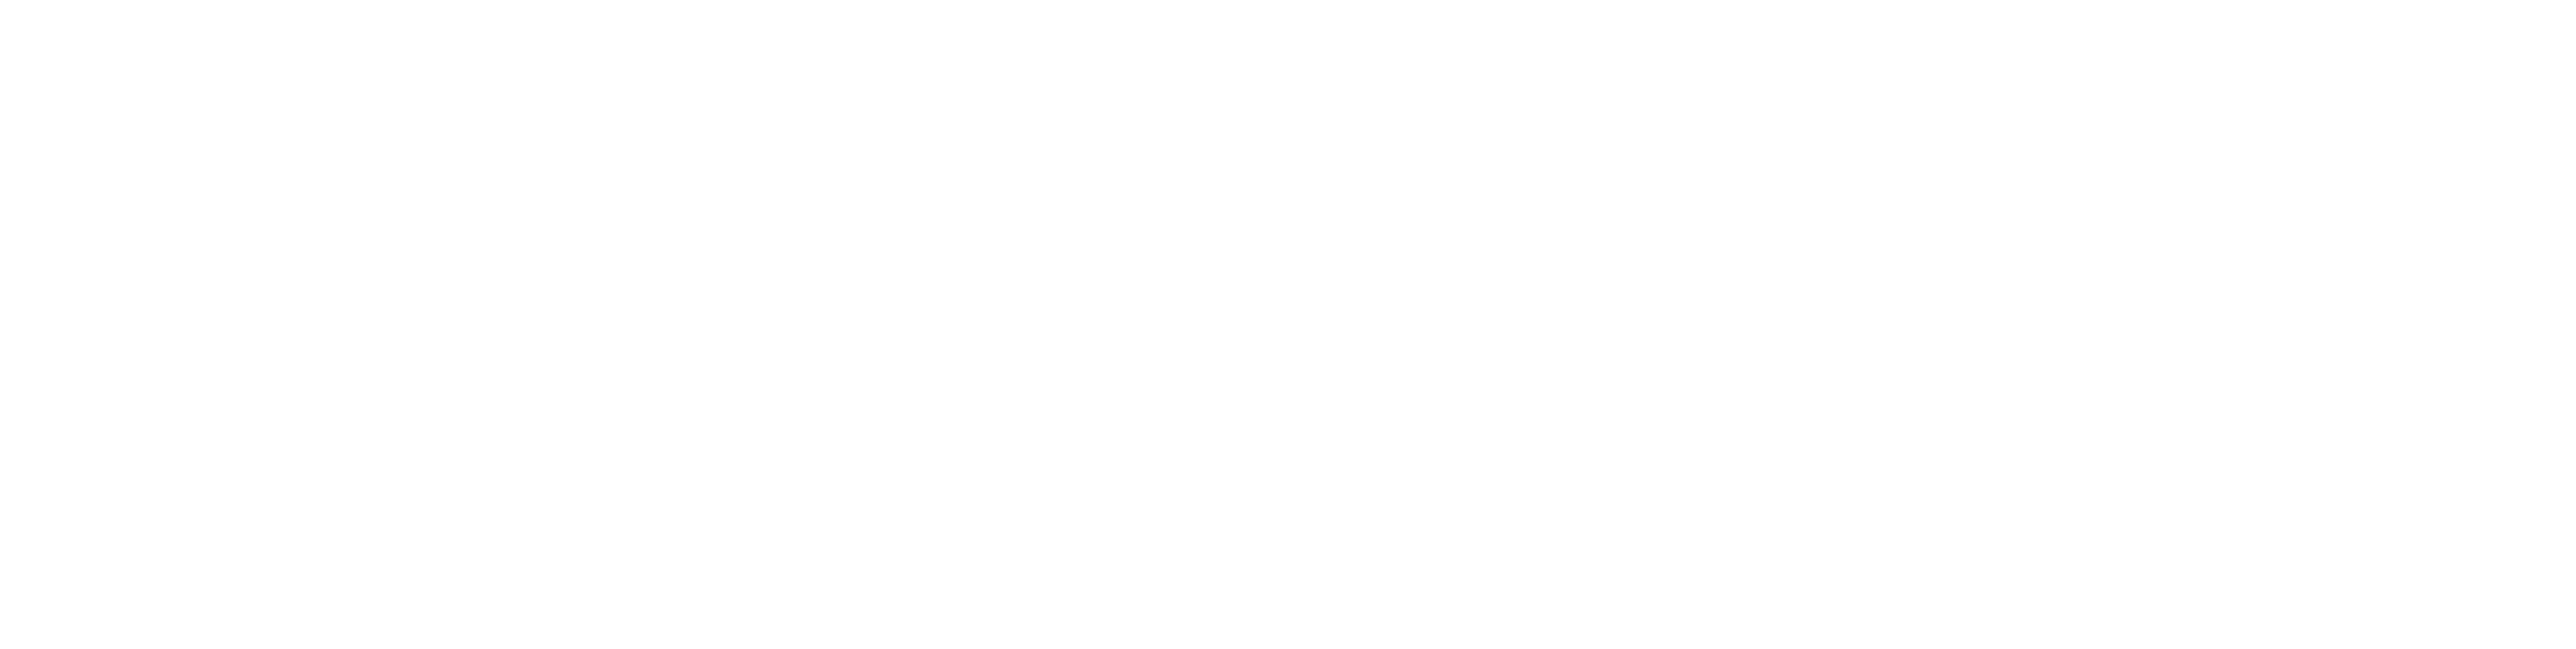 Fundid - Logo - White